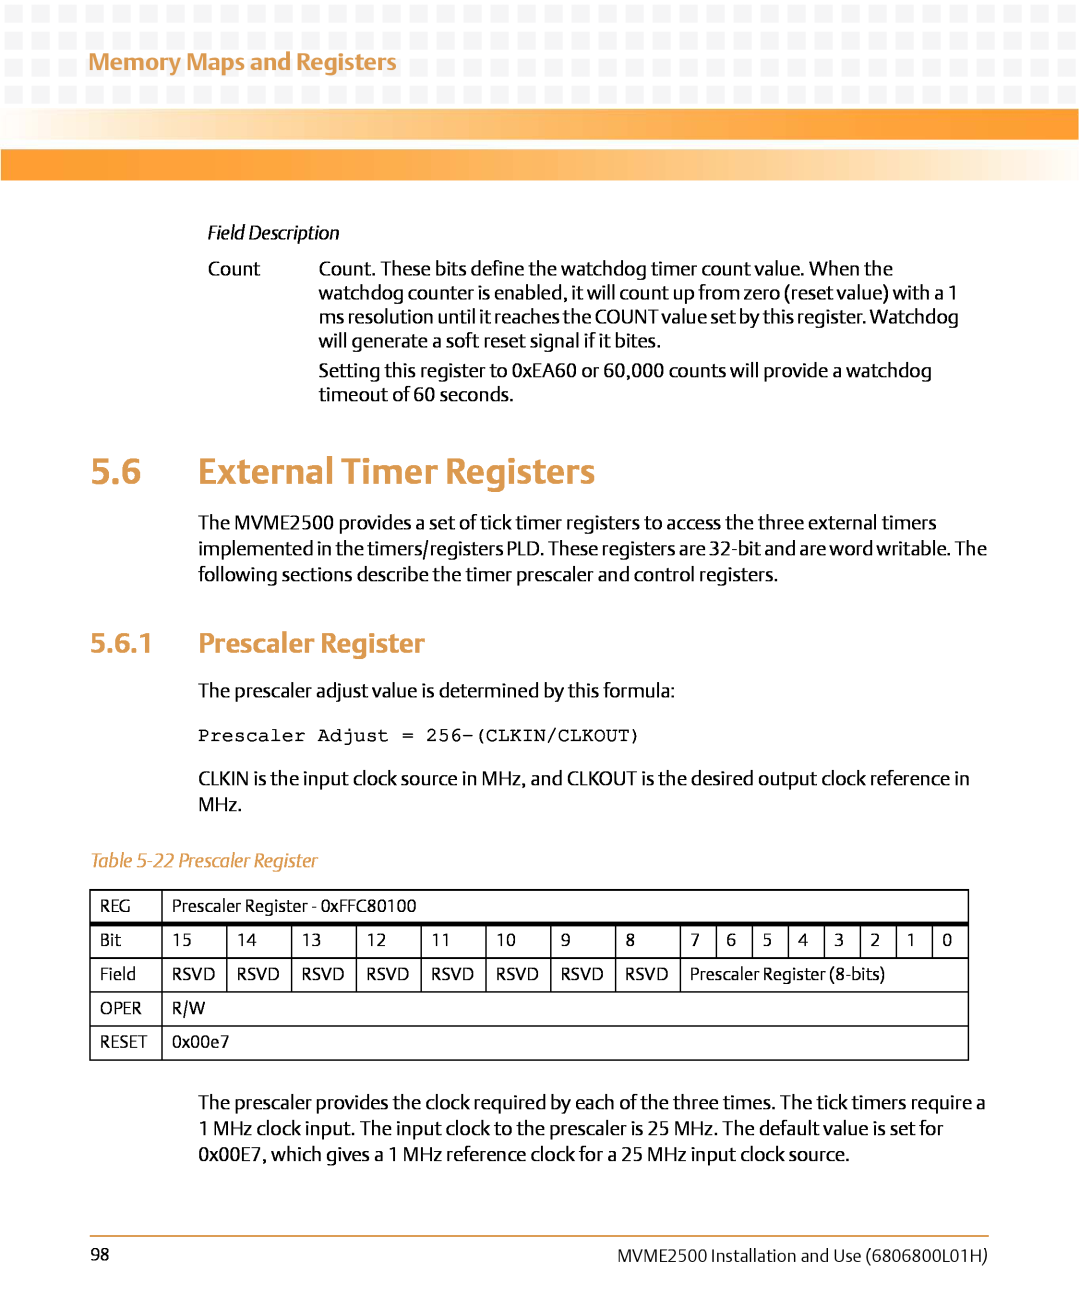 Emerson MVME2500 manual External Timer Registers, 22 Prescaler Register, Memory Maps and Registers, Field Description 